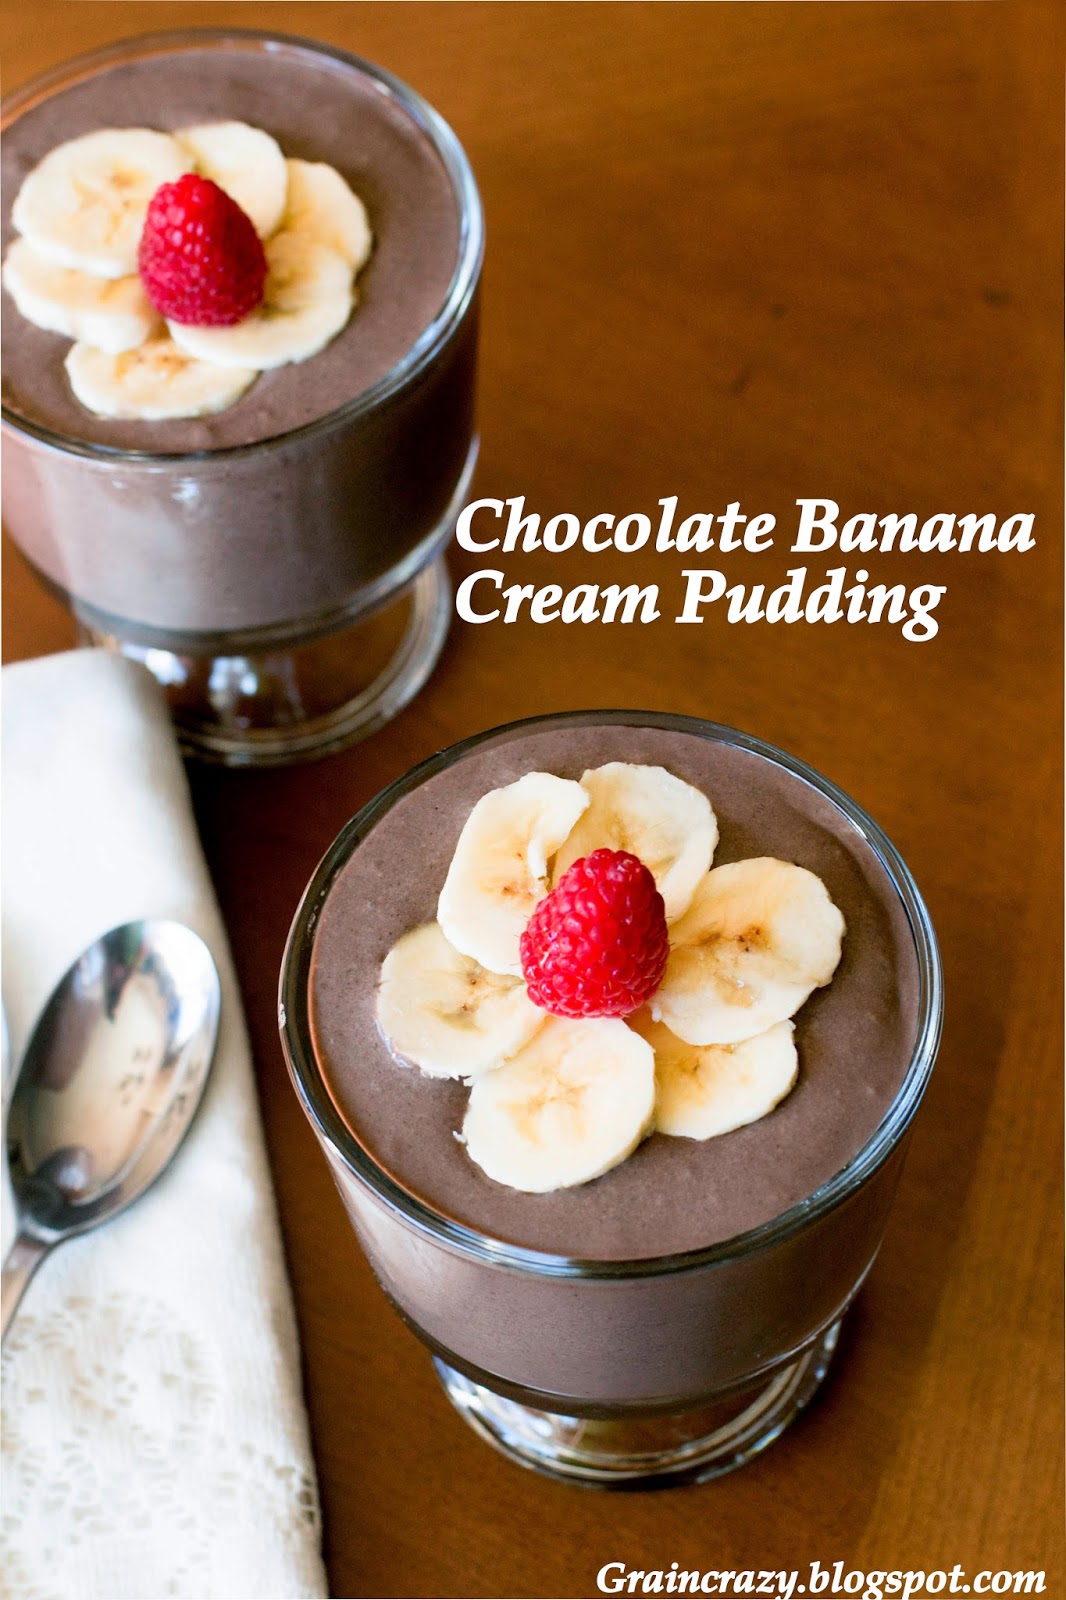 Grain Crazy: Chocolate Banana Cream Pudding